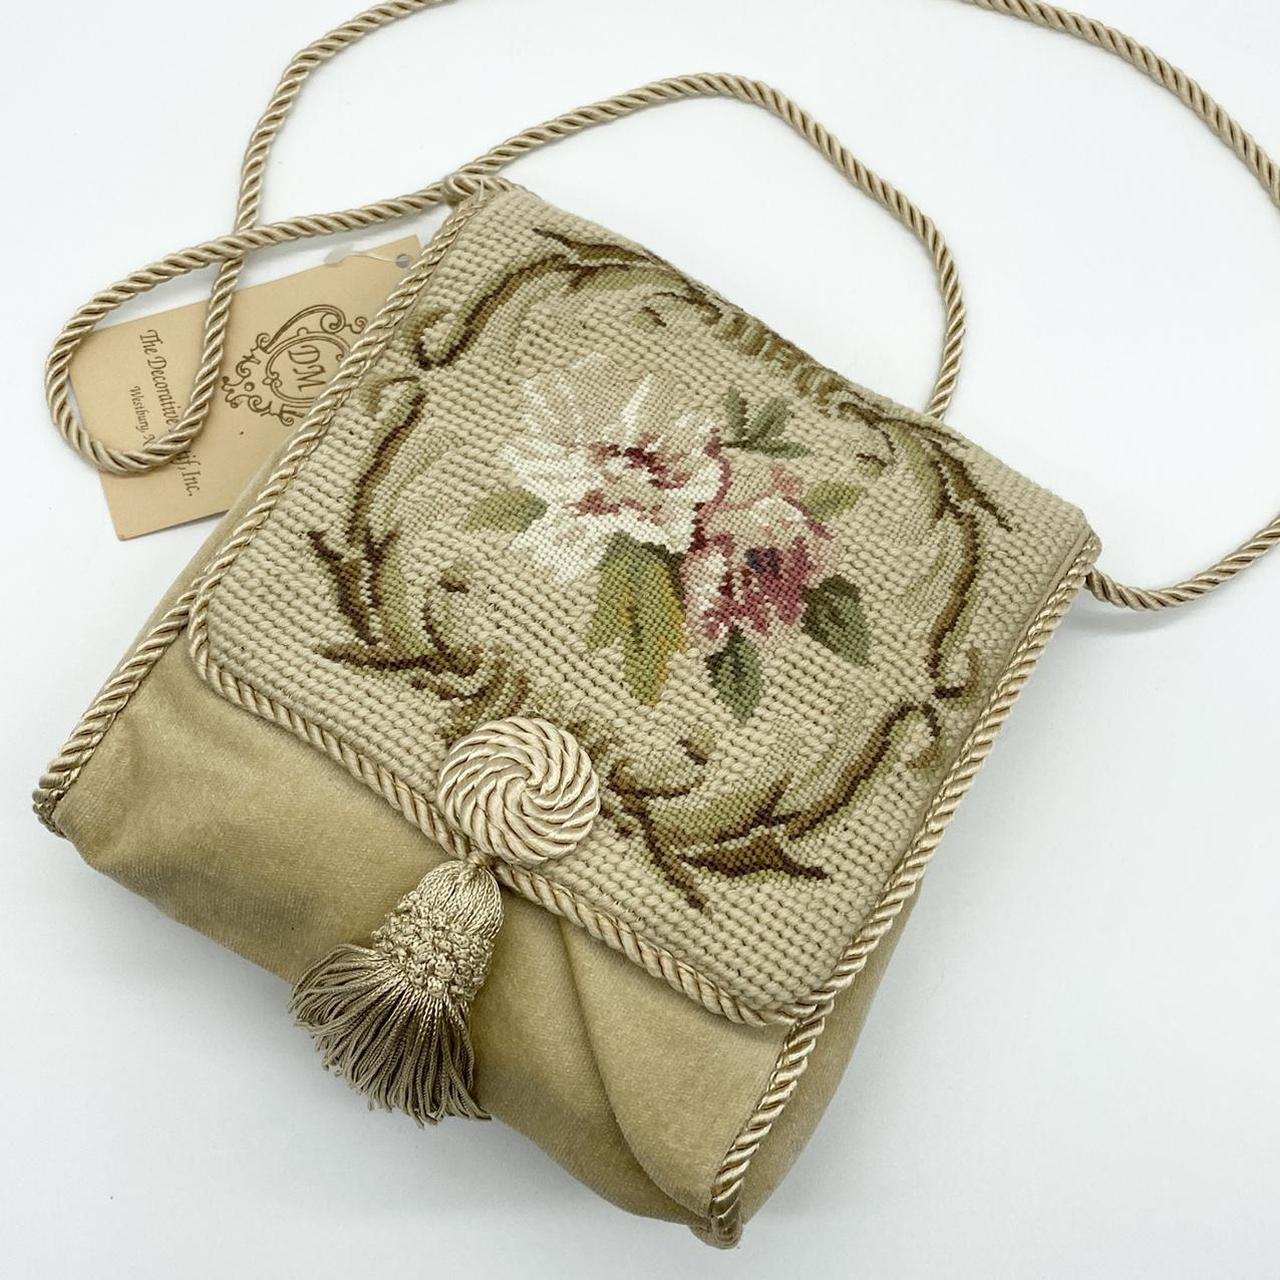 Product Image 1 - NWT Vintage Needpoint Bag! Very